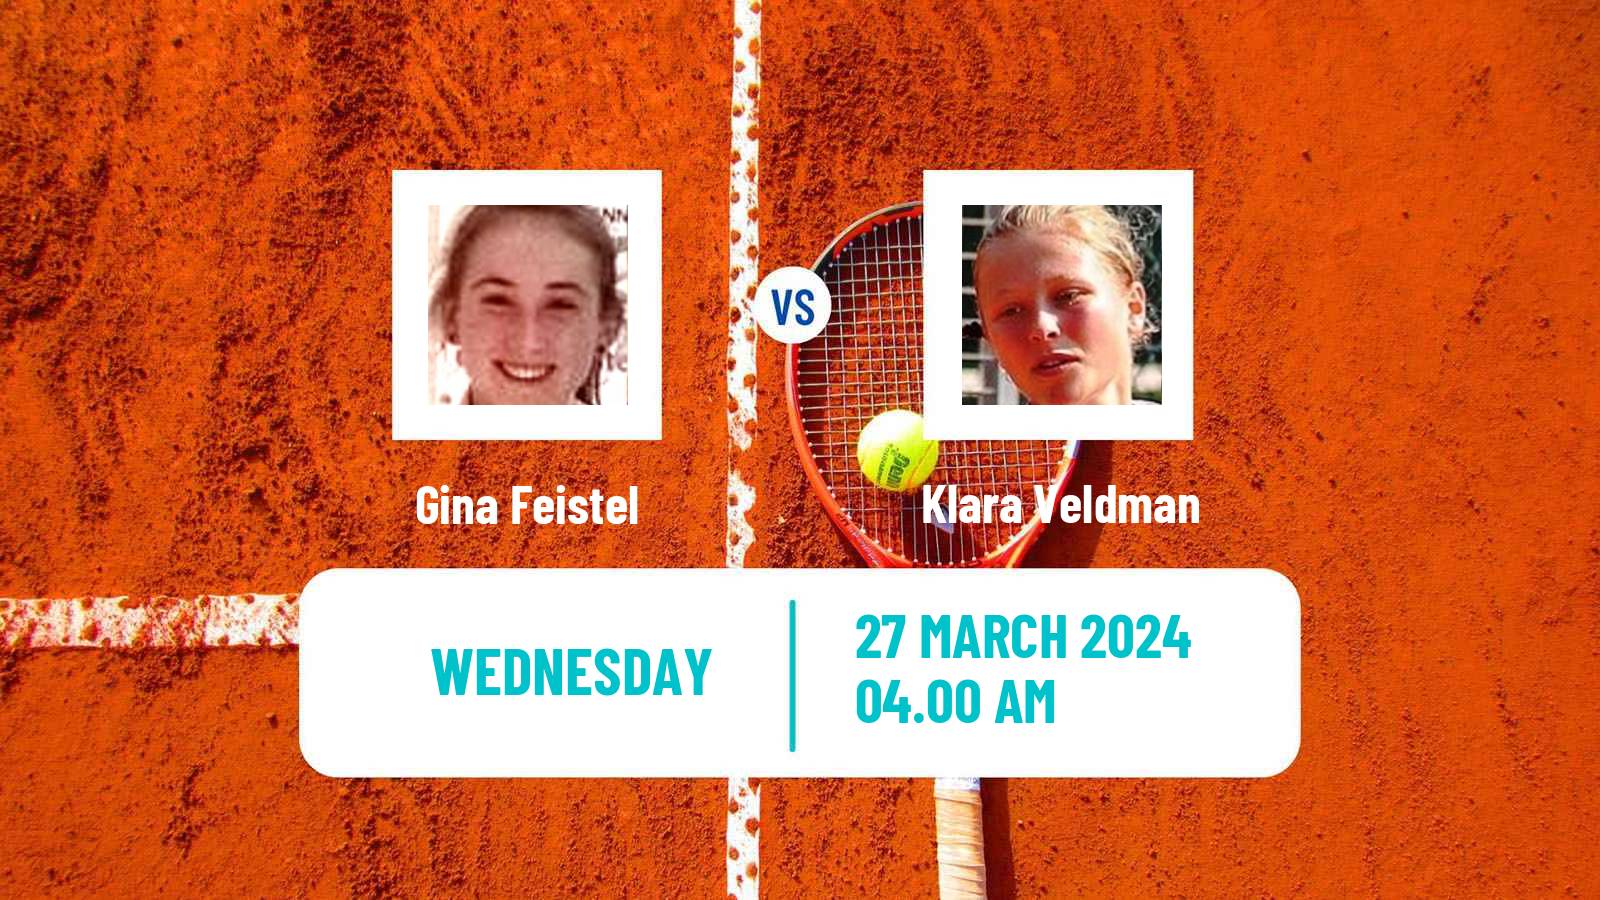 Tennis ITF W15 Monastir 11 Women Gina Feistel - Klara Veldman